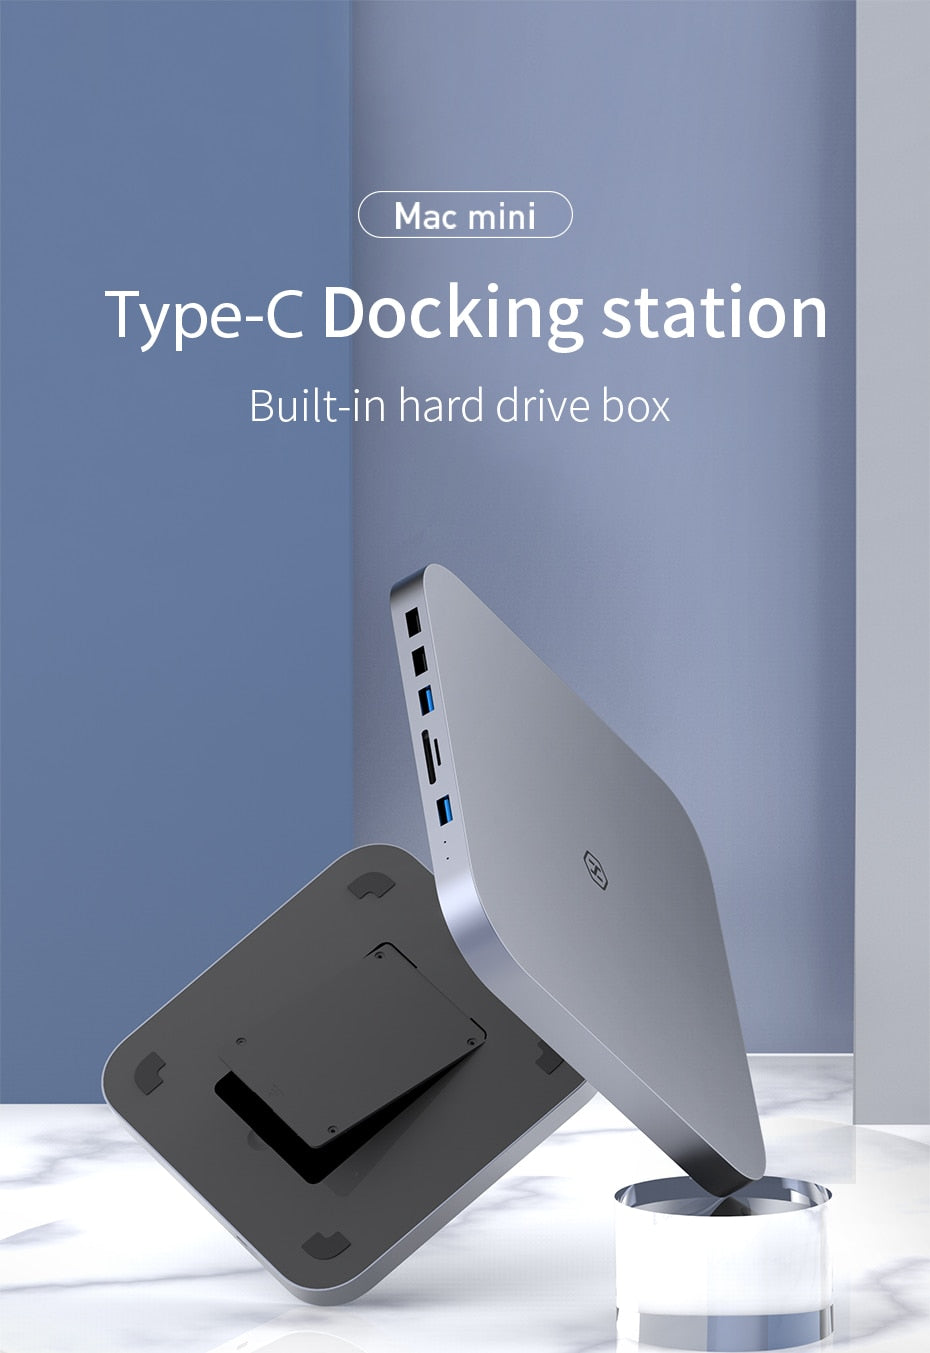 USB-C Hub with SATA Hard Drive Enclosure for Mac Mini or Mac Book Pro - Accessories - buy epic deals